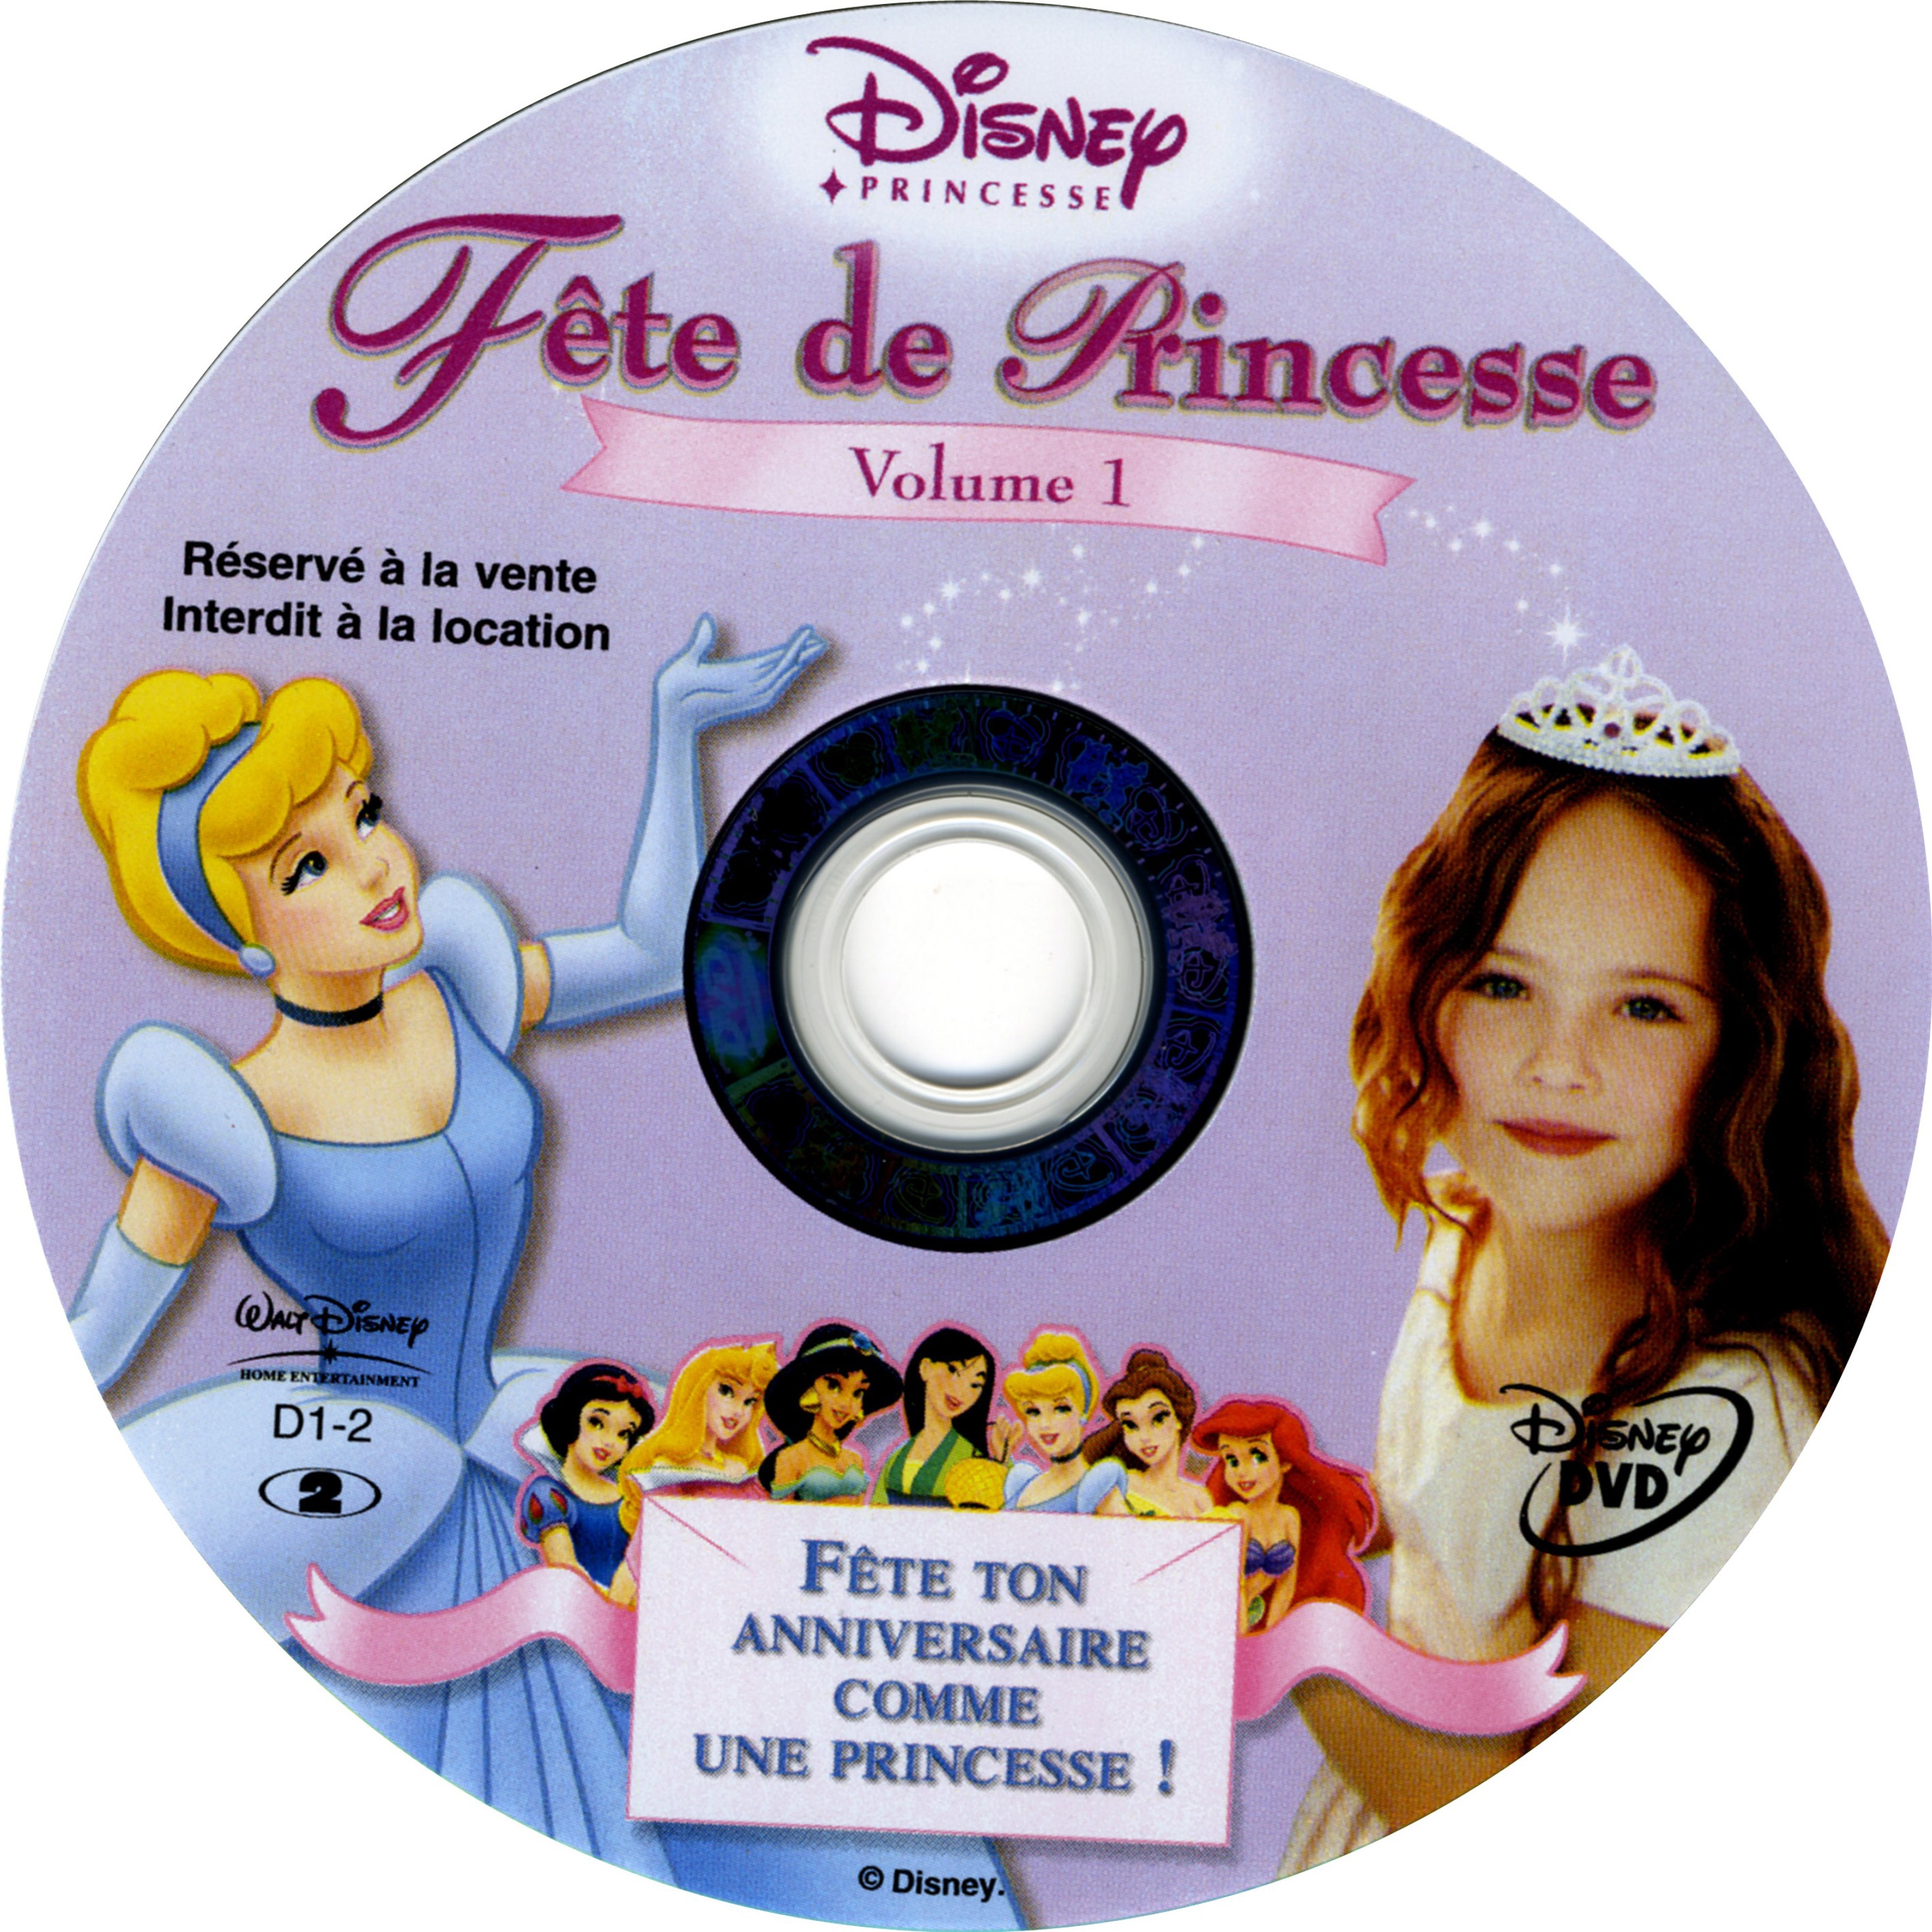 Fete de princesse vol 01